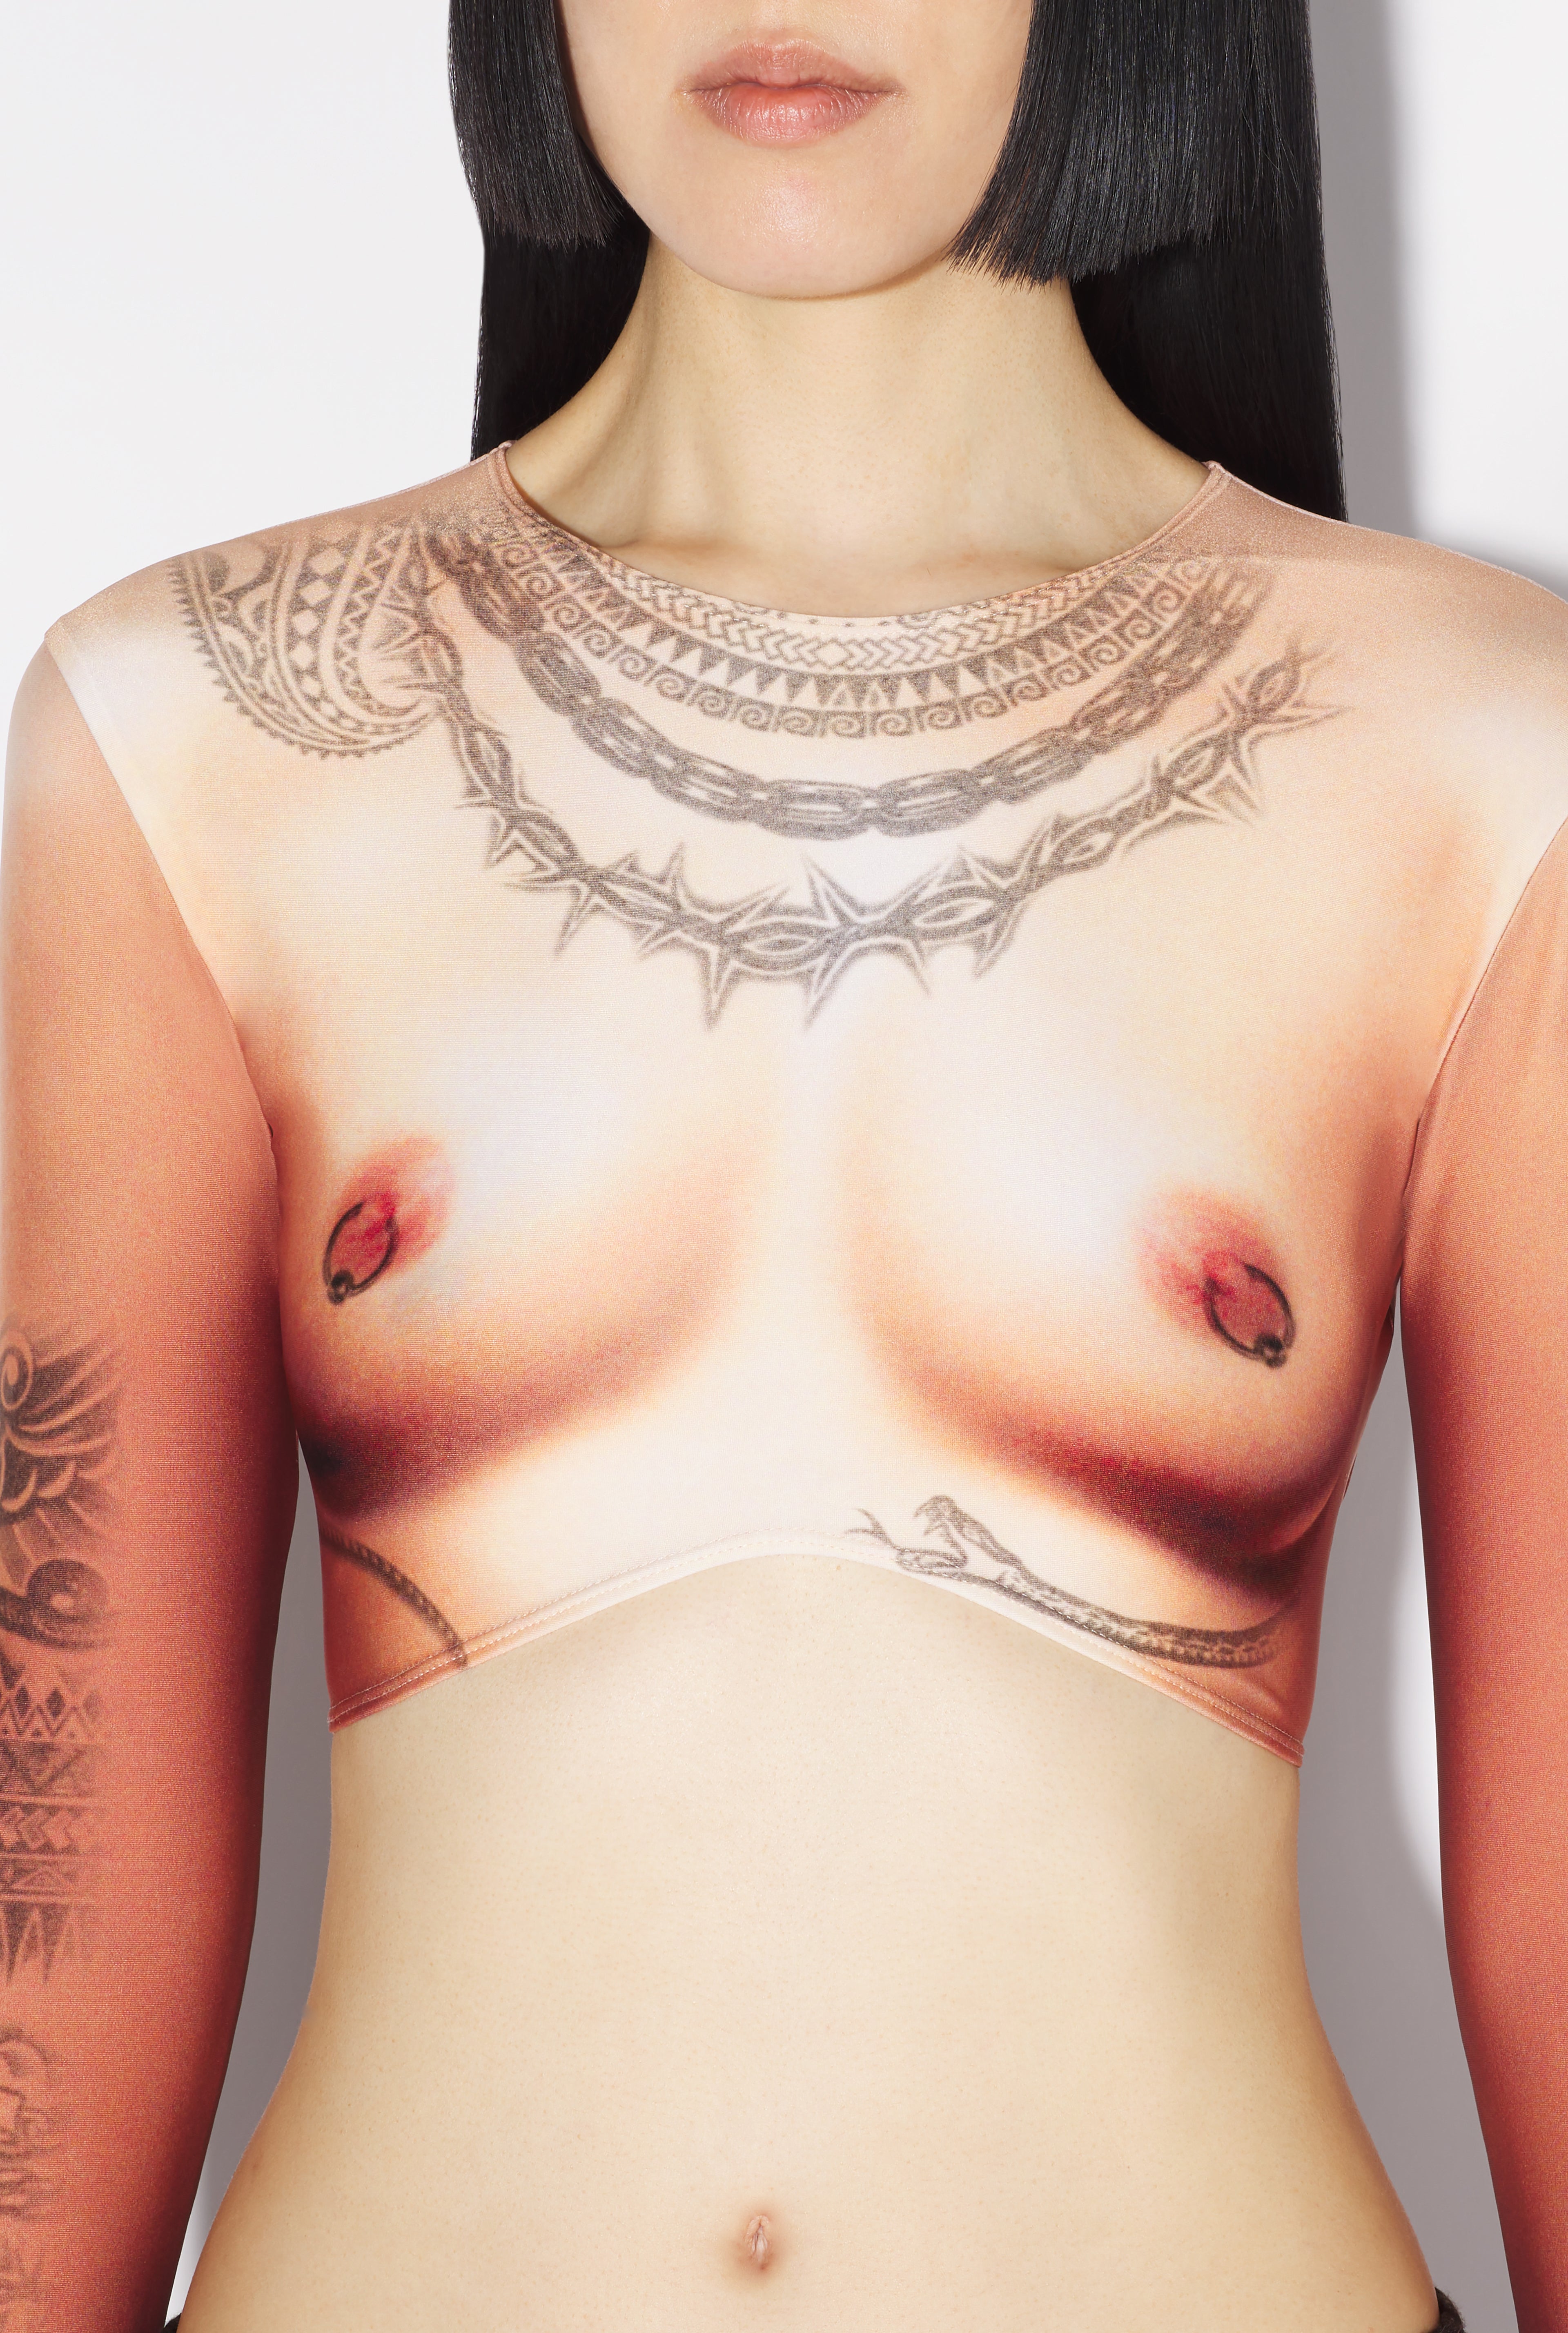 The Nude Body Tattoo Crop Top